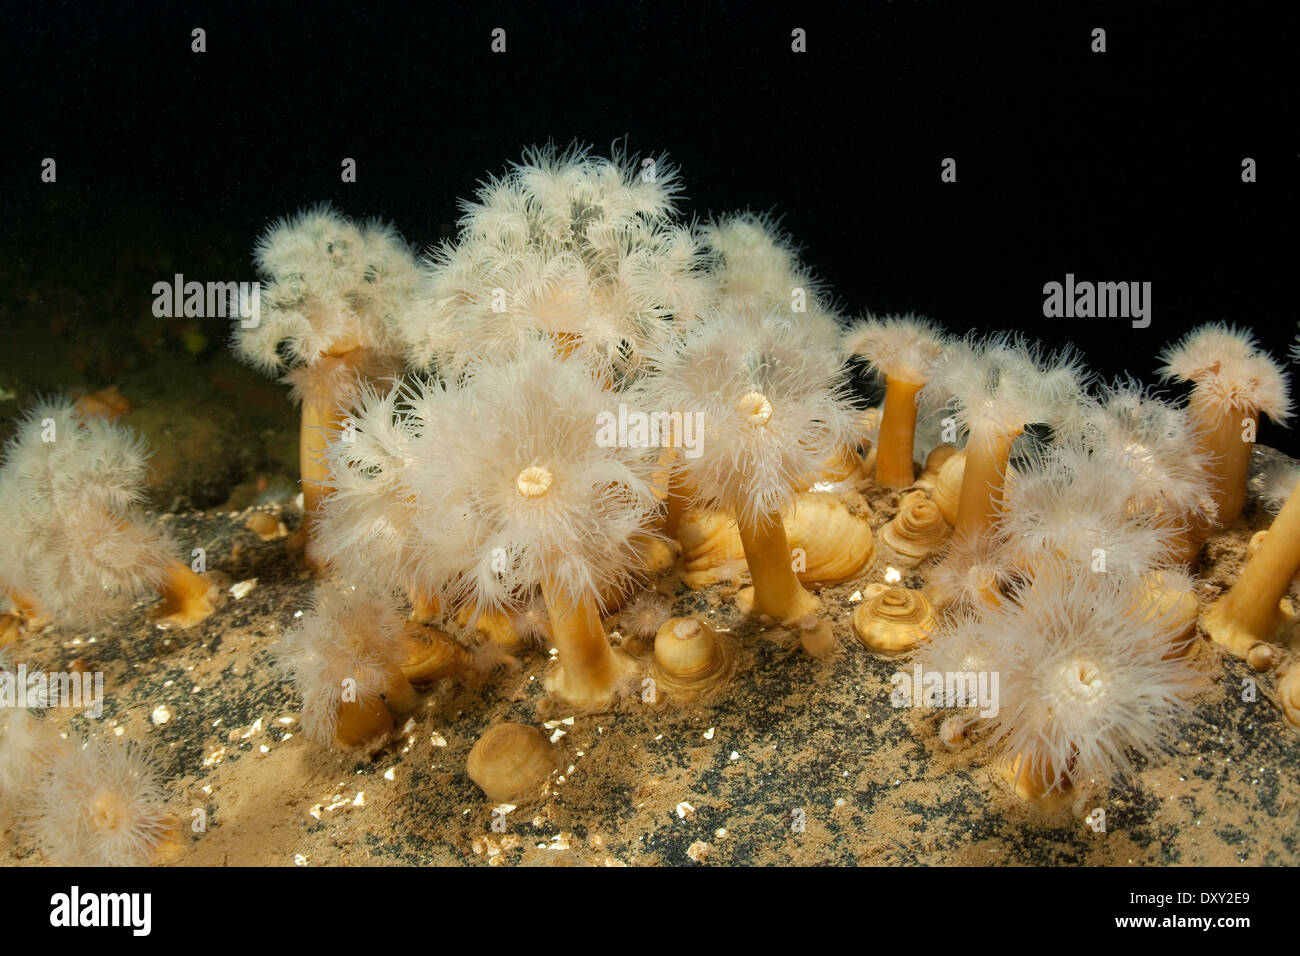 Aggregieren von Anemone, Metridium senile, weißes Meer, Karelien, Russland Stockfoto